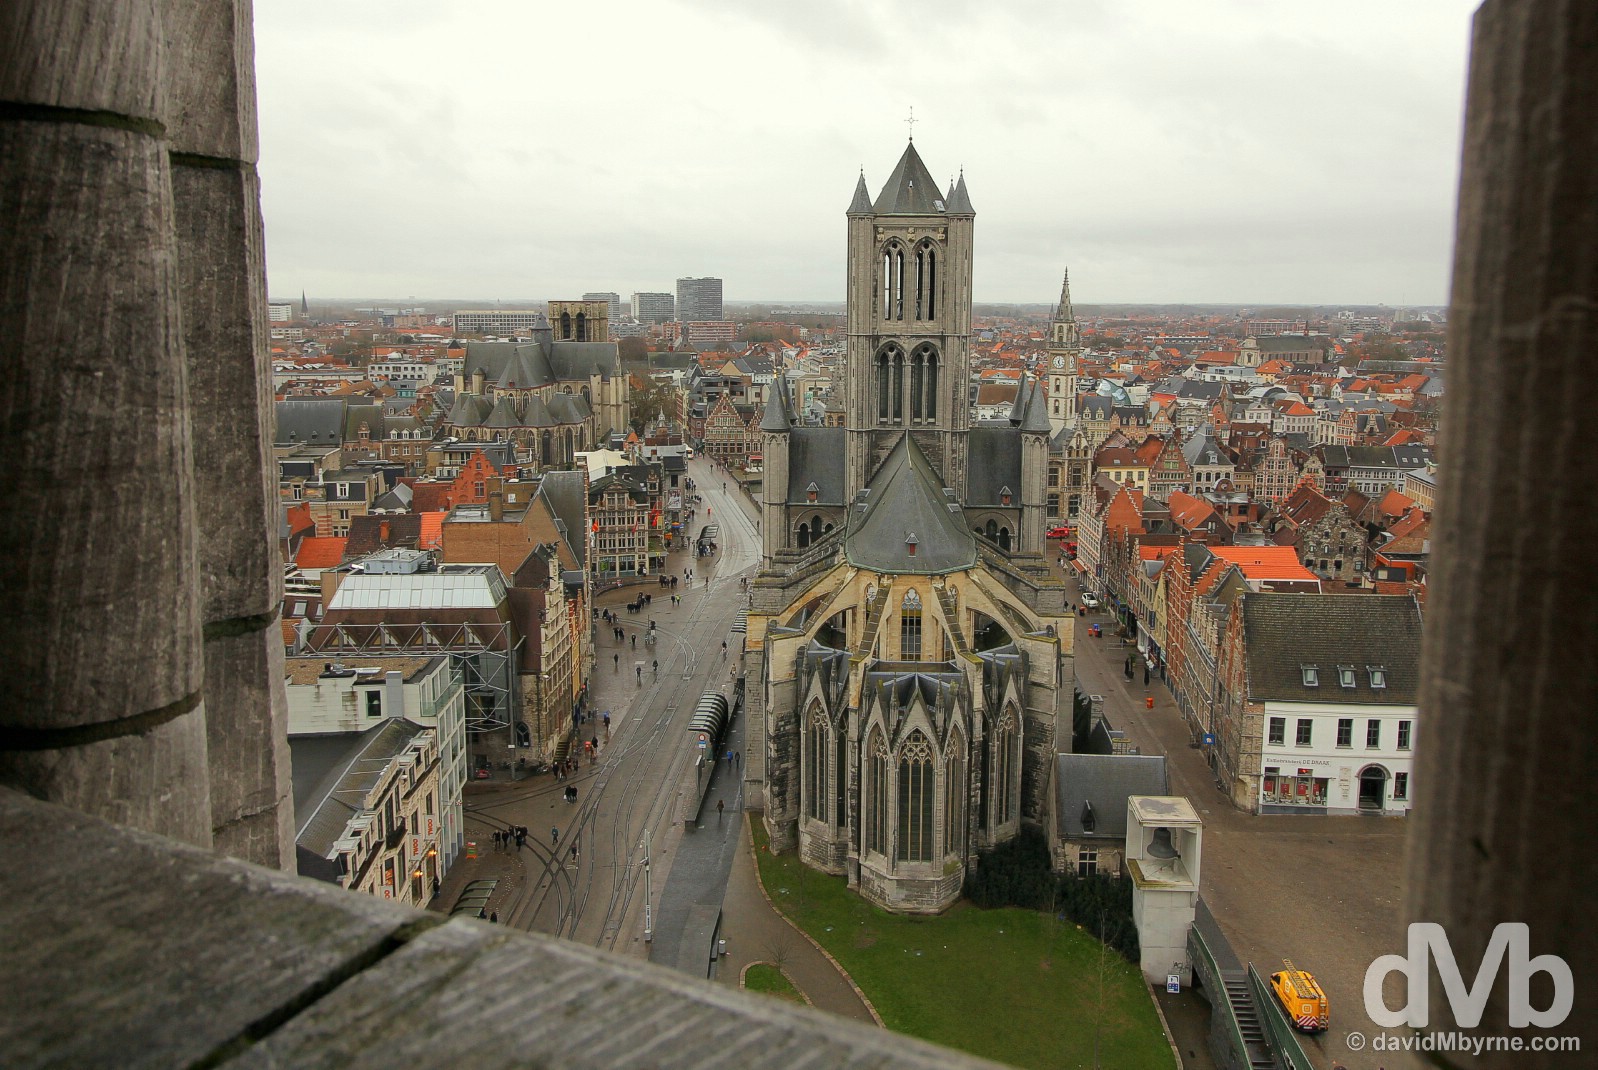 Sint Niklaaskerk/St. Nicholas' Church as seen from the windswept 91-metre-tall, UNESCO-listed Belfry in Ghent, western Flanders, Belgium. January 15, 2016.